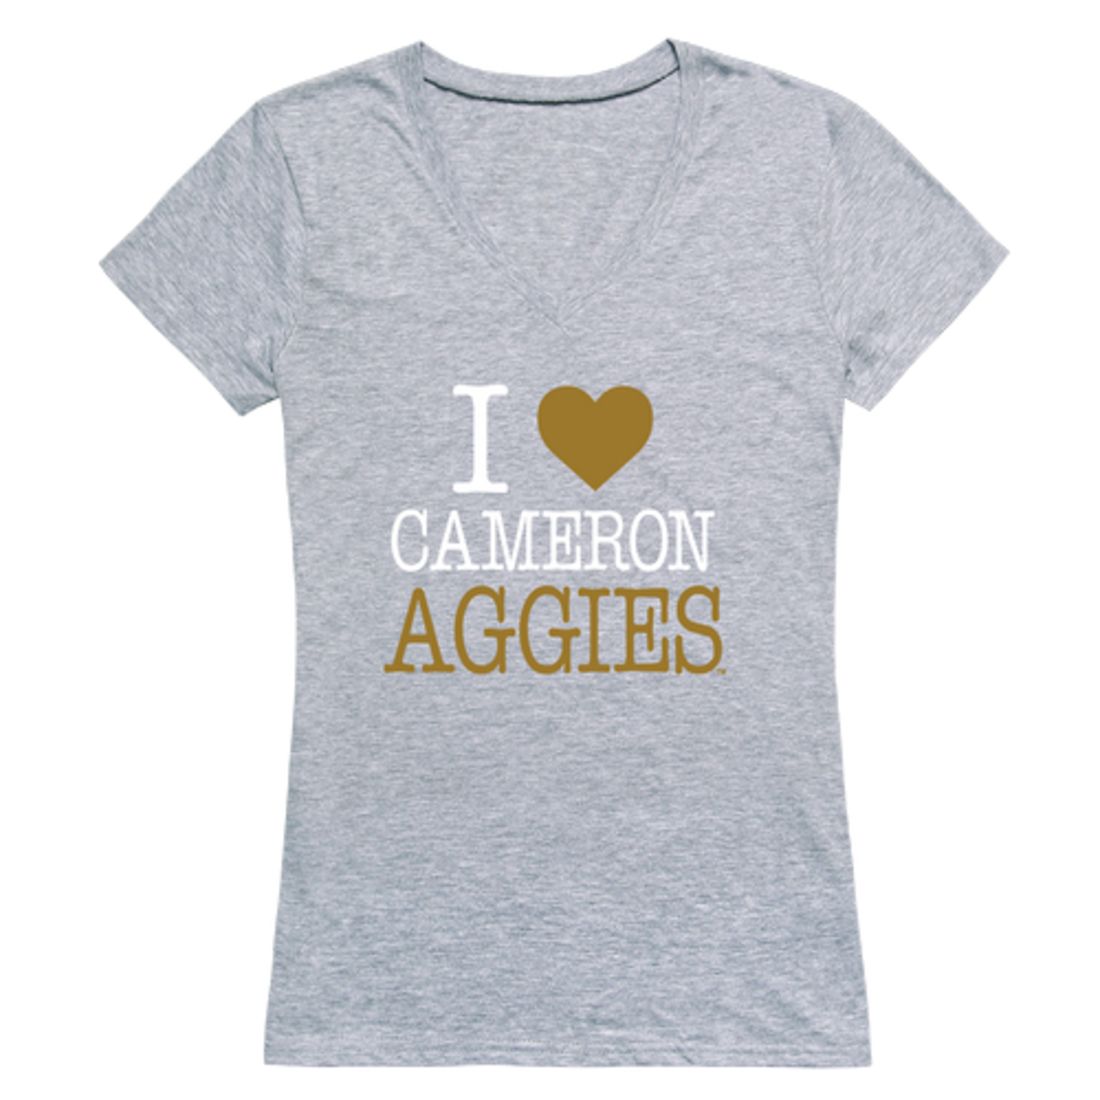 I Love Cameron University Aggies Womens T-Shirt Tee